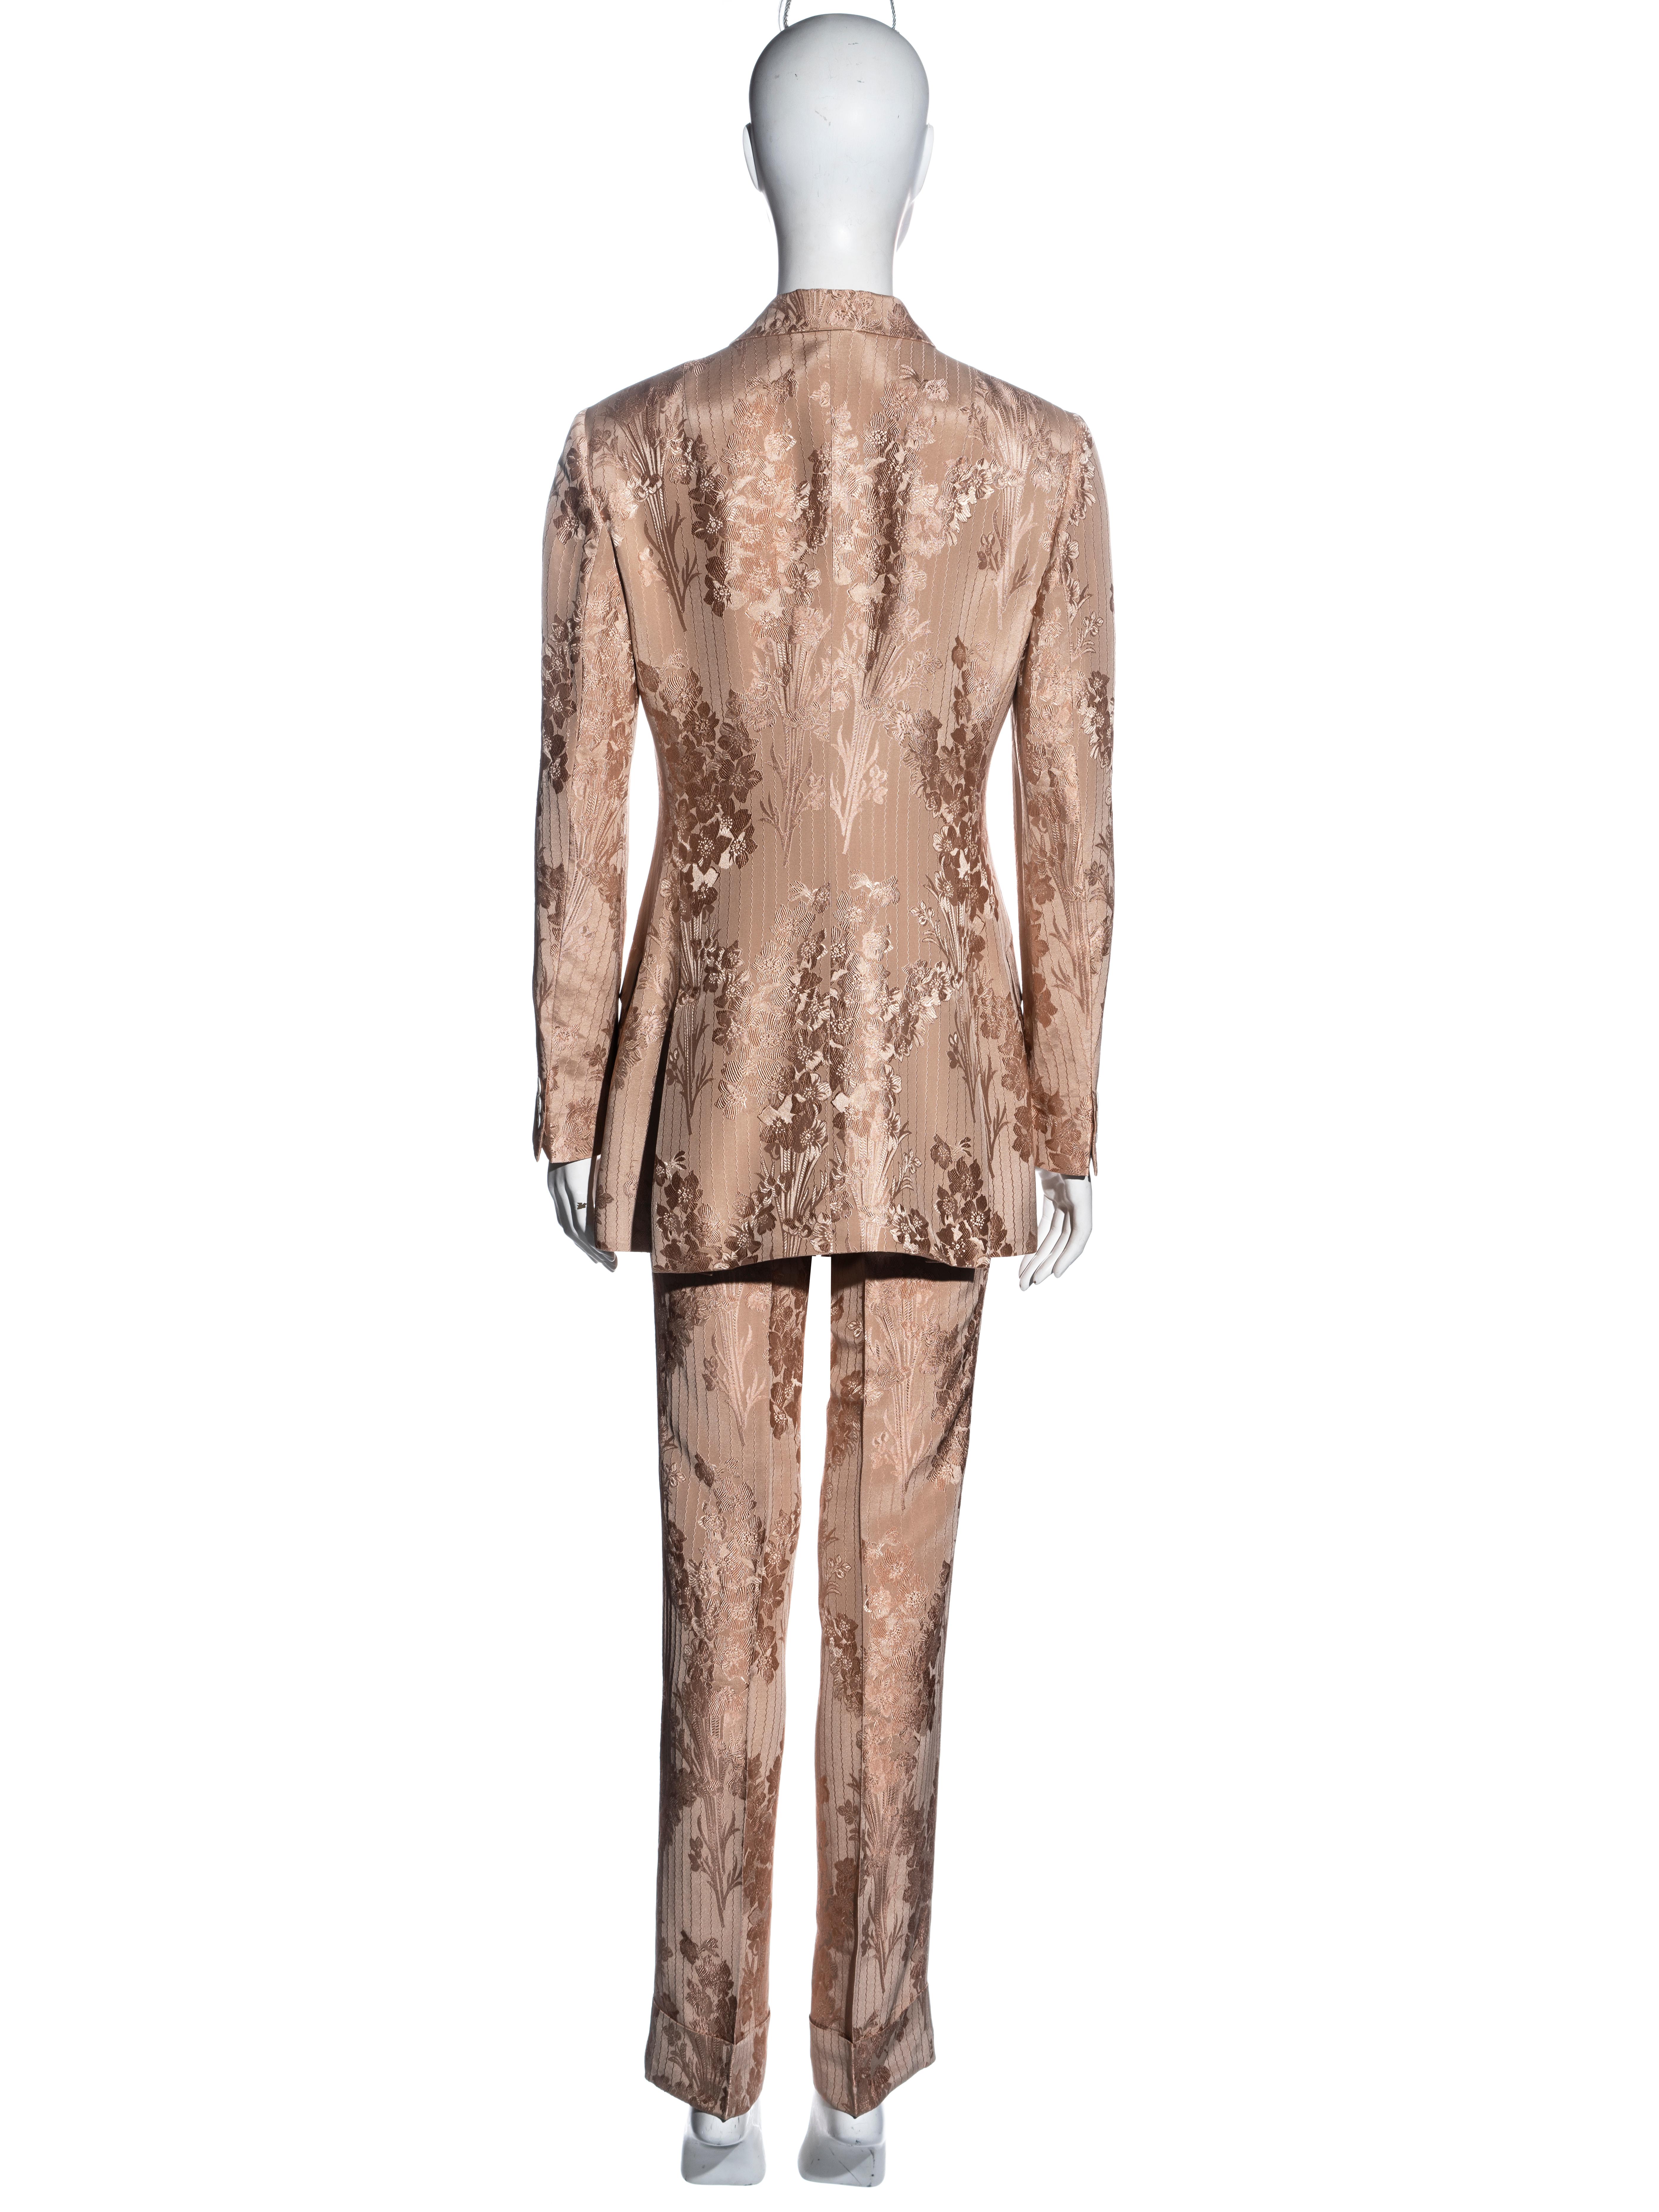 Dolce & Gabbana silk viscose floral brocade pant suit, ss 1997 2